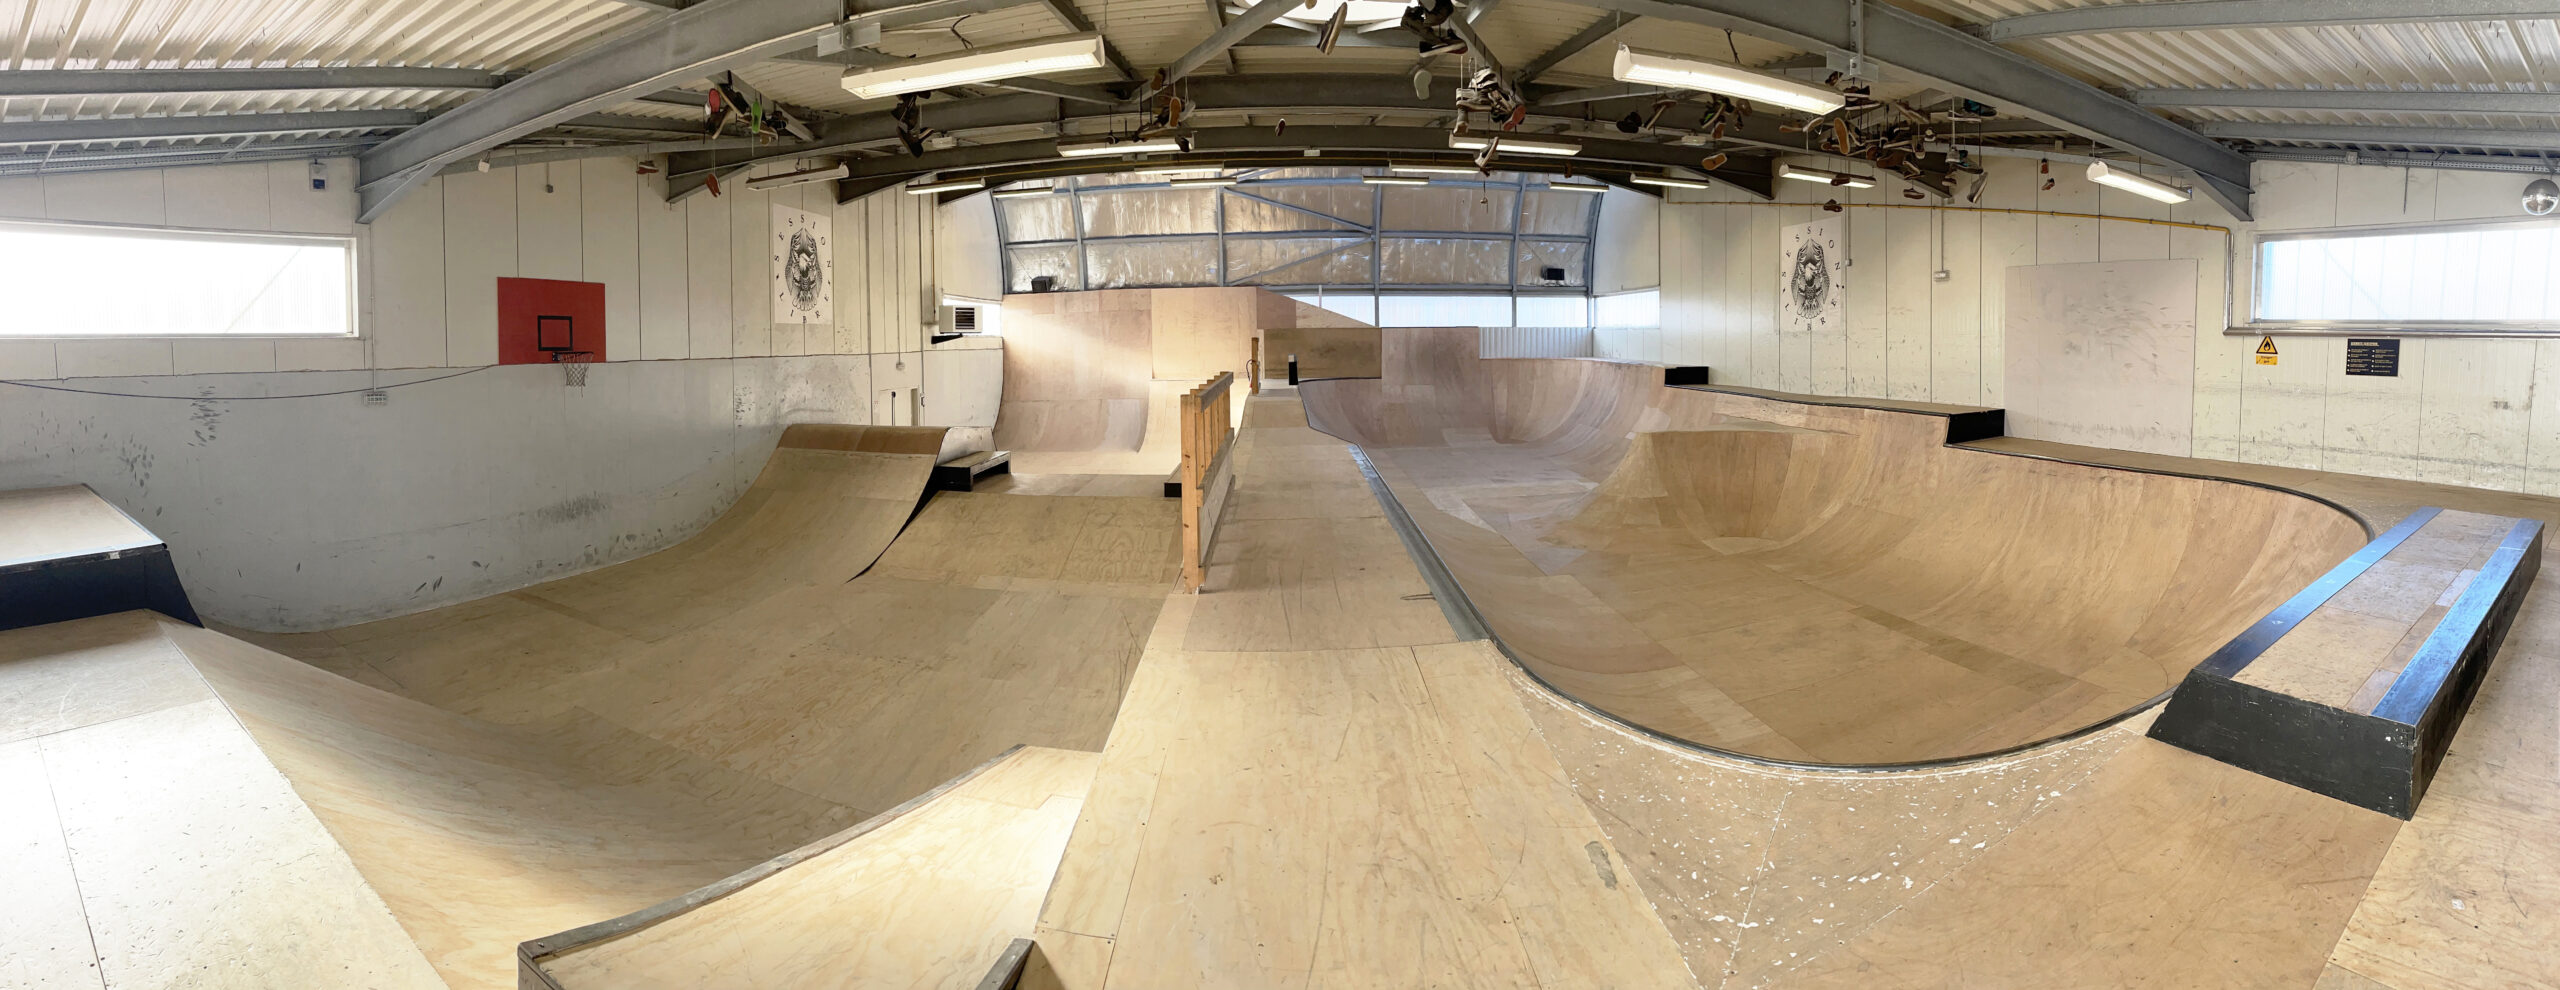 Skatepark indoor